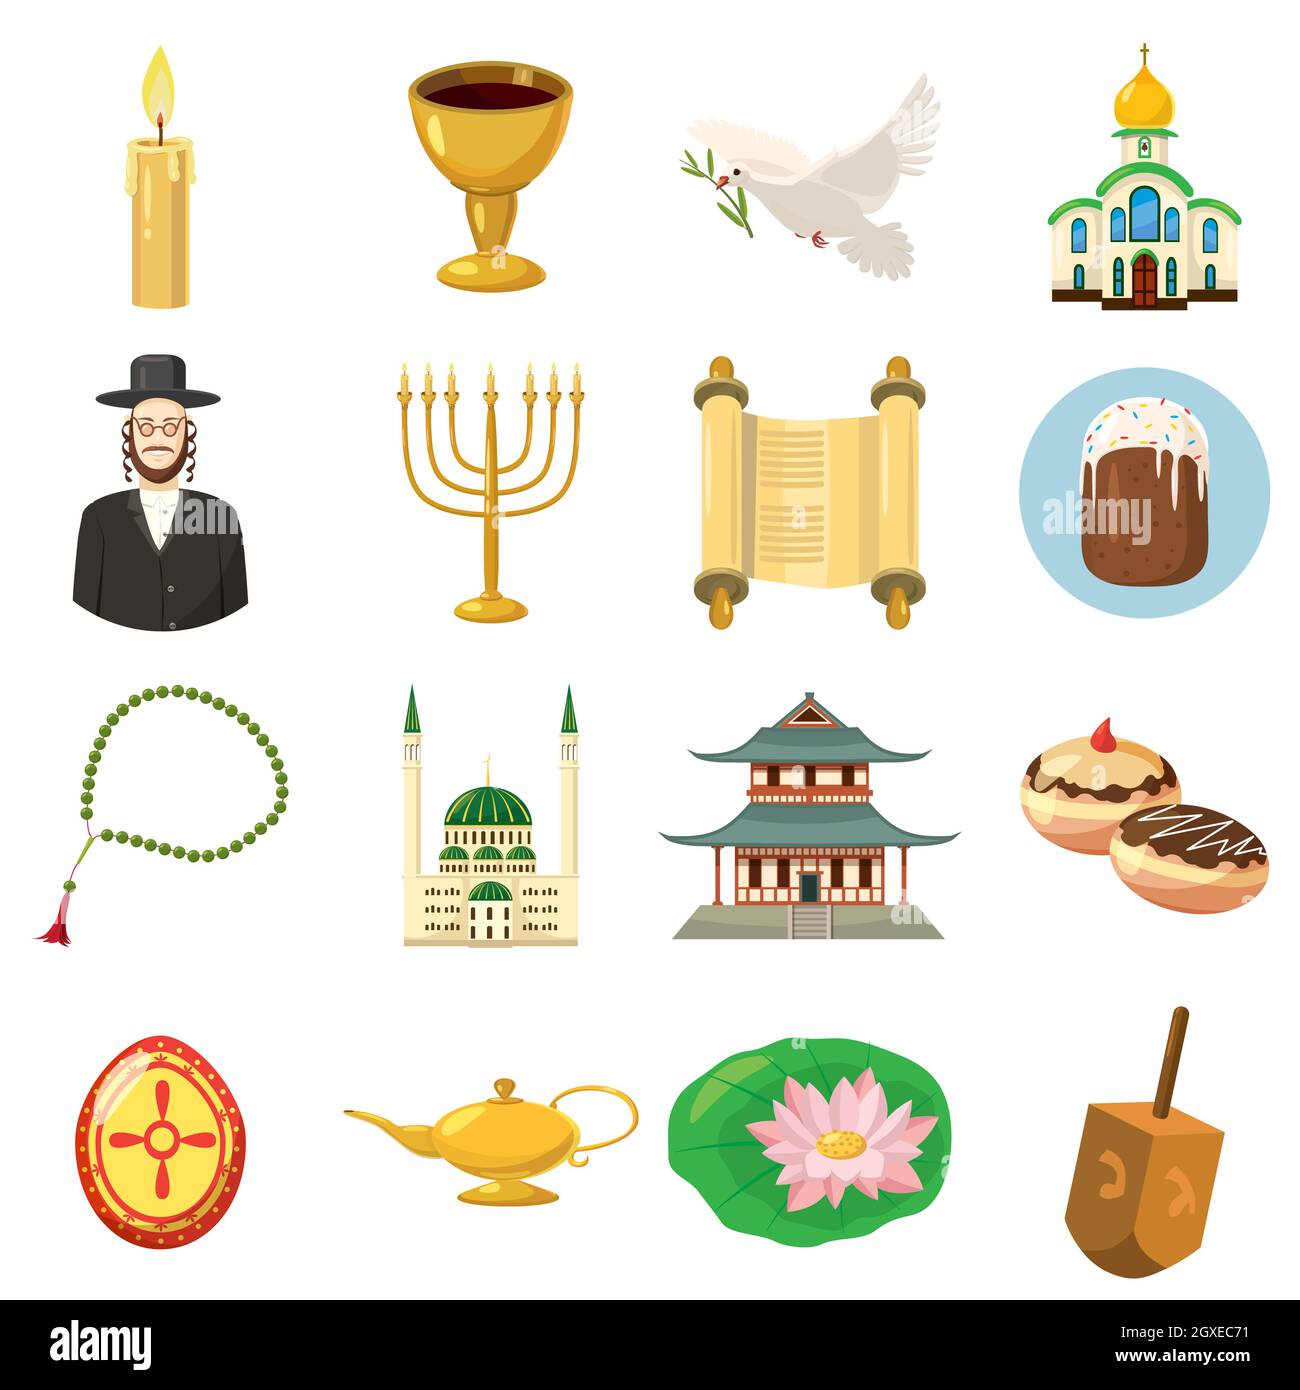 Religion icons set in cartoon style isolated on white background Stock Photo